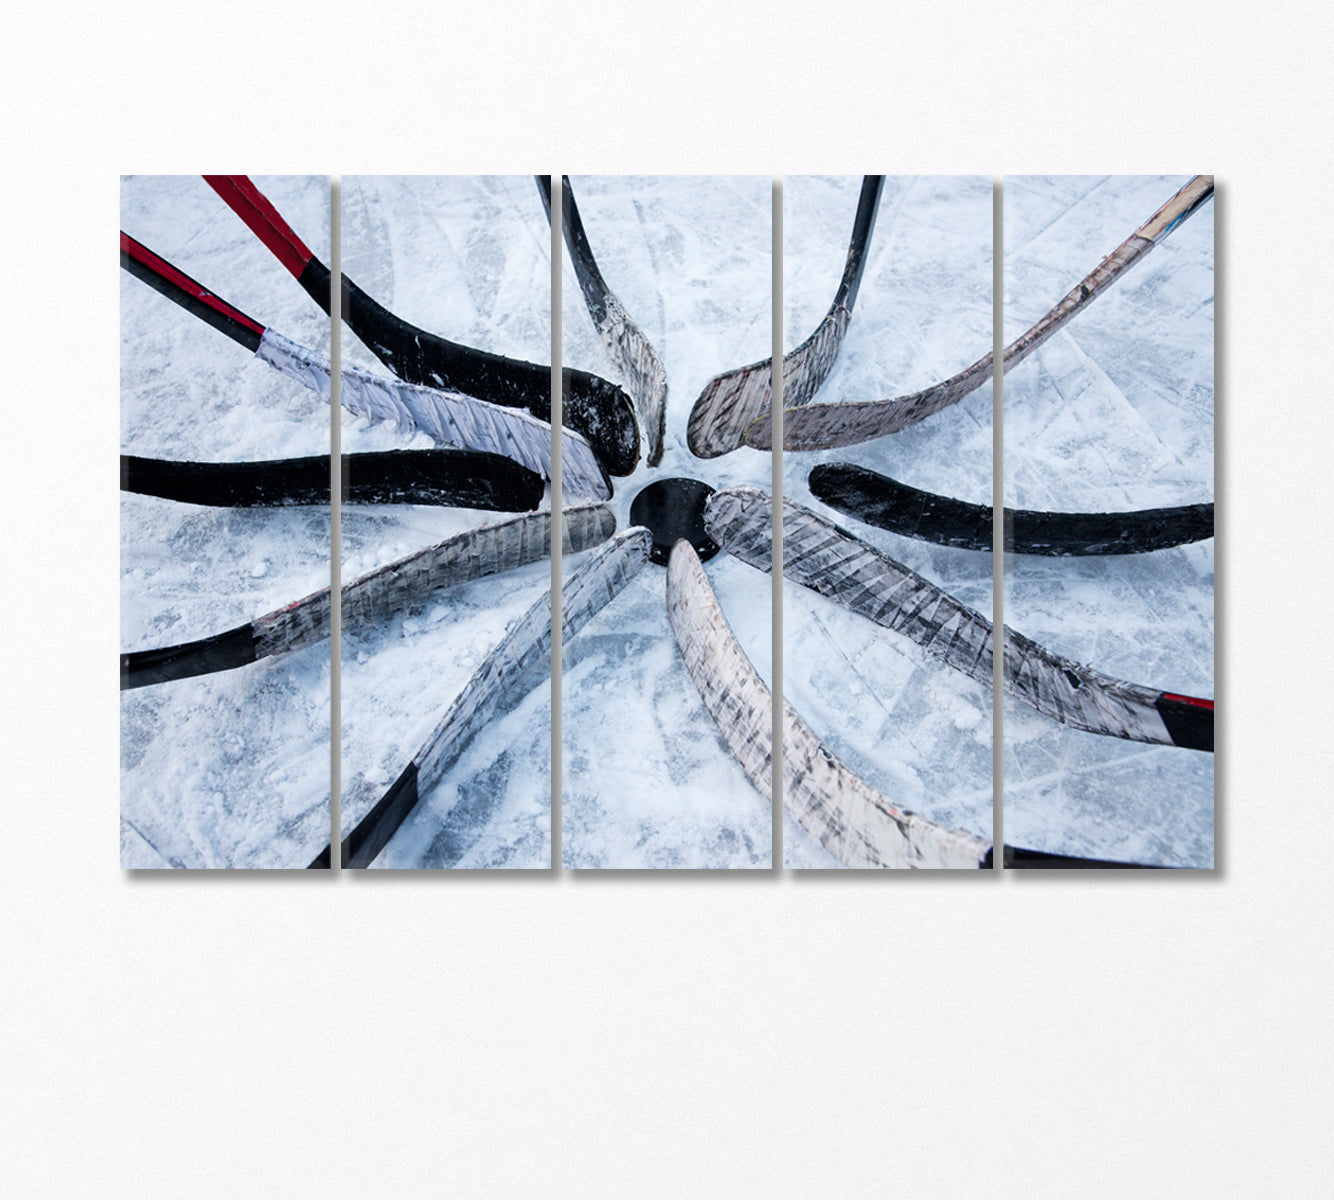 Eleven Hockey Players Canvas Print-Canvas Print-CetArt-5 Panels-36x24 inches-CetArt